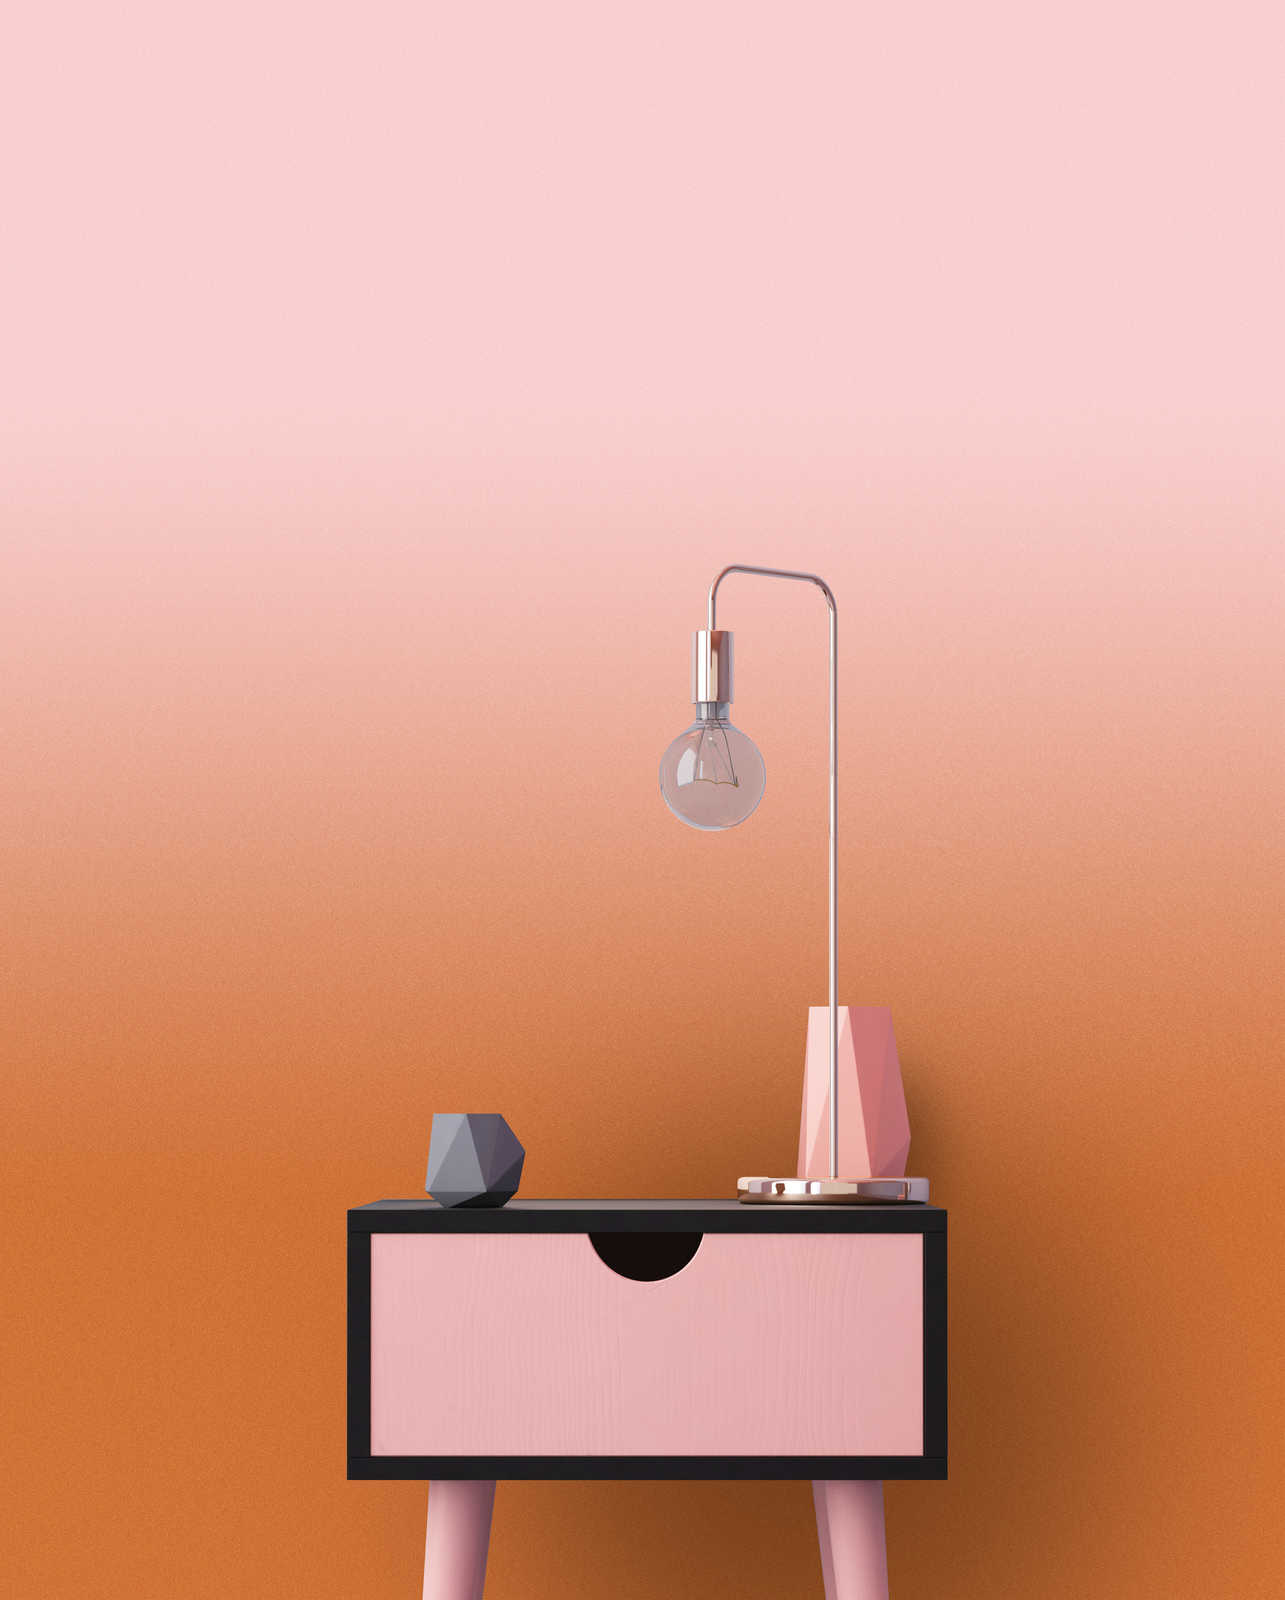             Colour Studio 4 – Ombre Fototapete Farbverlauf Rosa & Orange
        